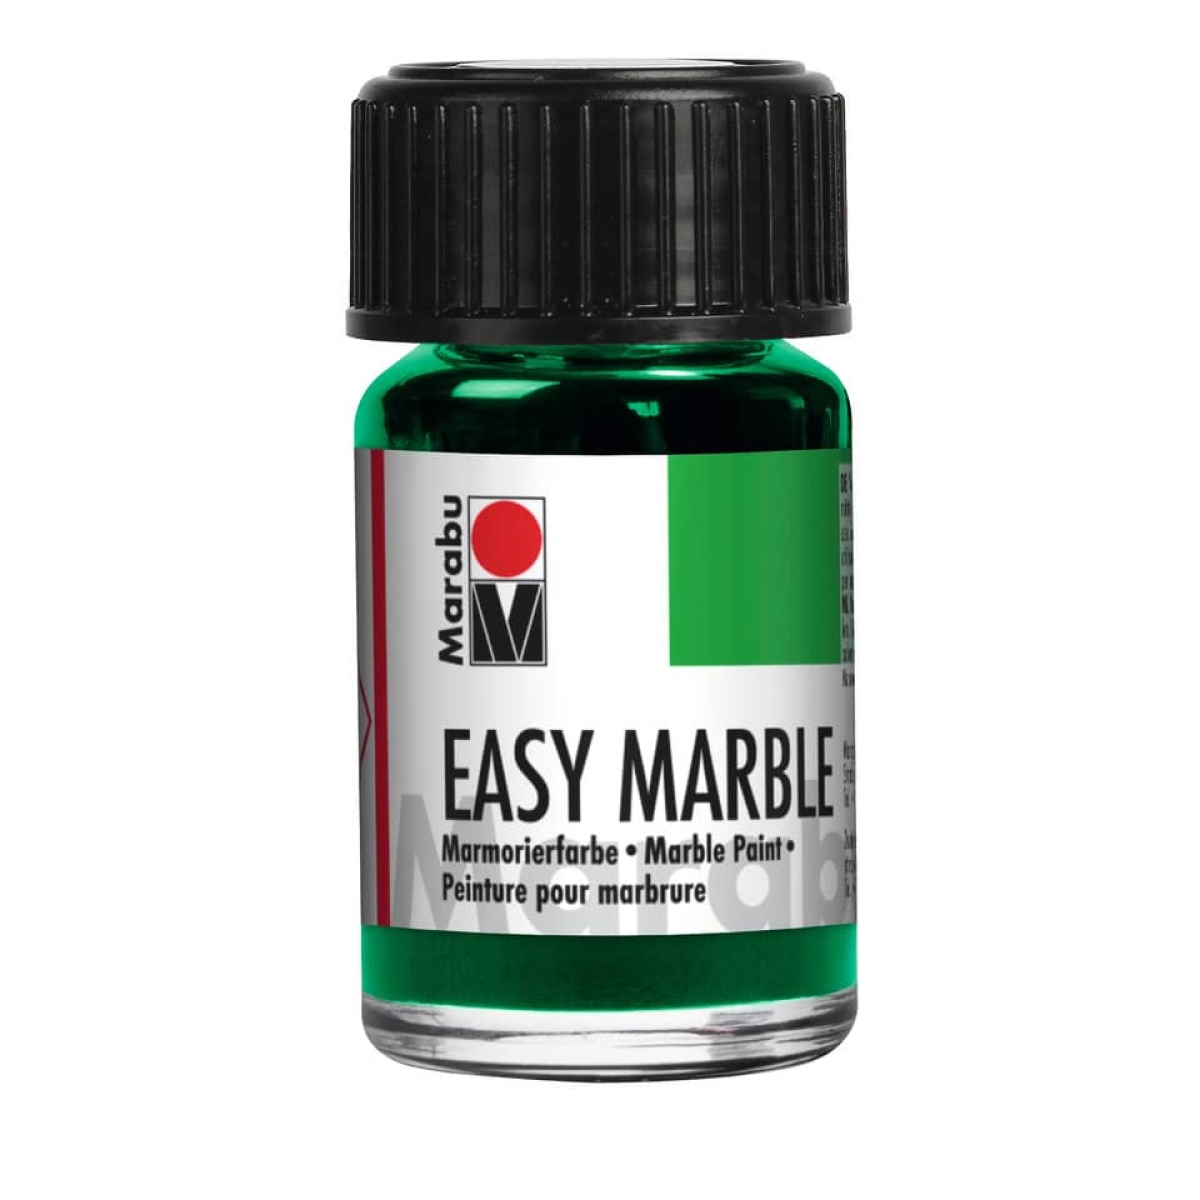 MARABUMarmorierfarbe Easy Marble, 15ml, saftgrün 13050 039 067Artikel-Nr: 4007751089021